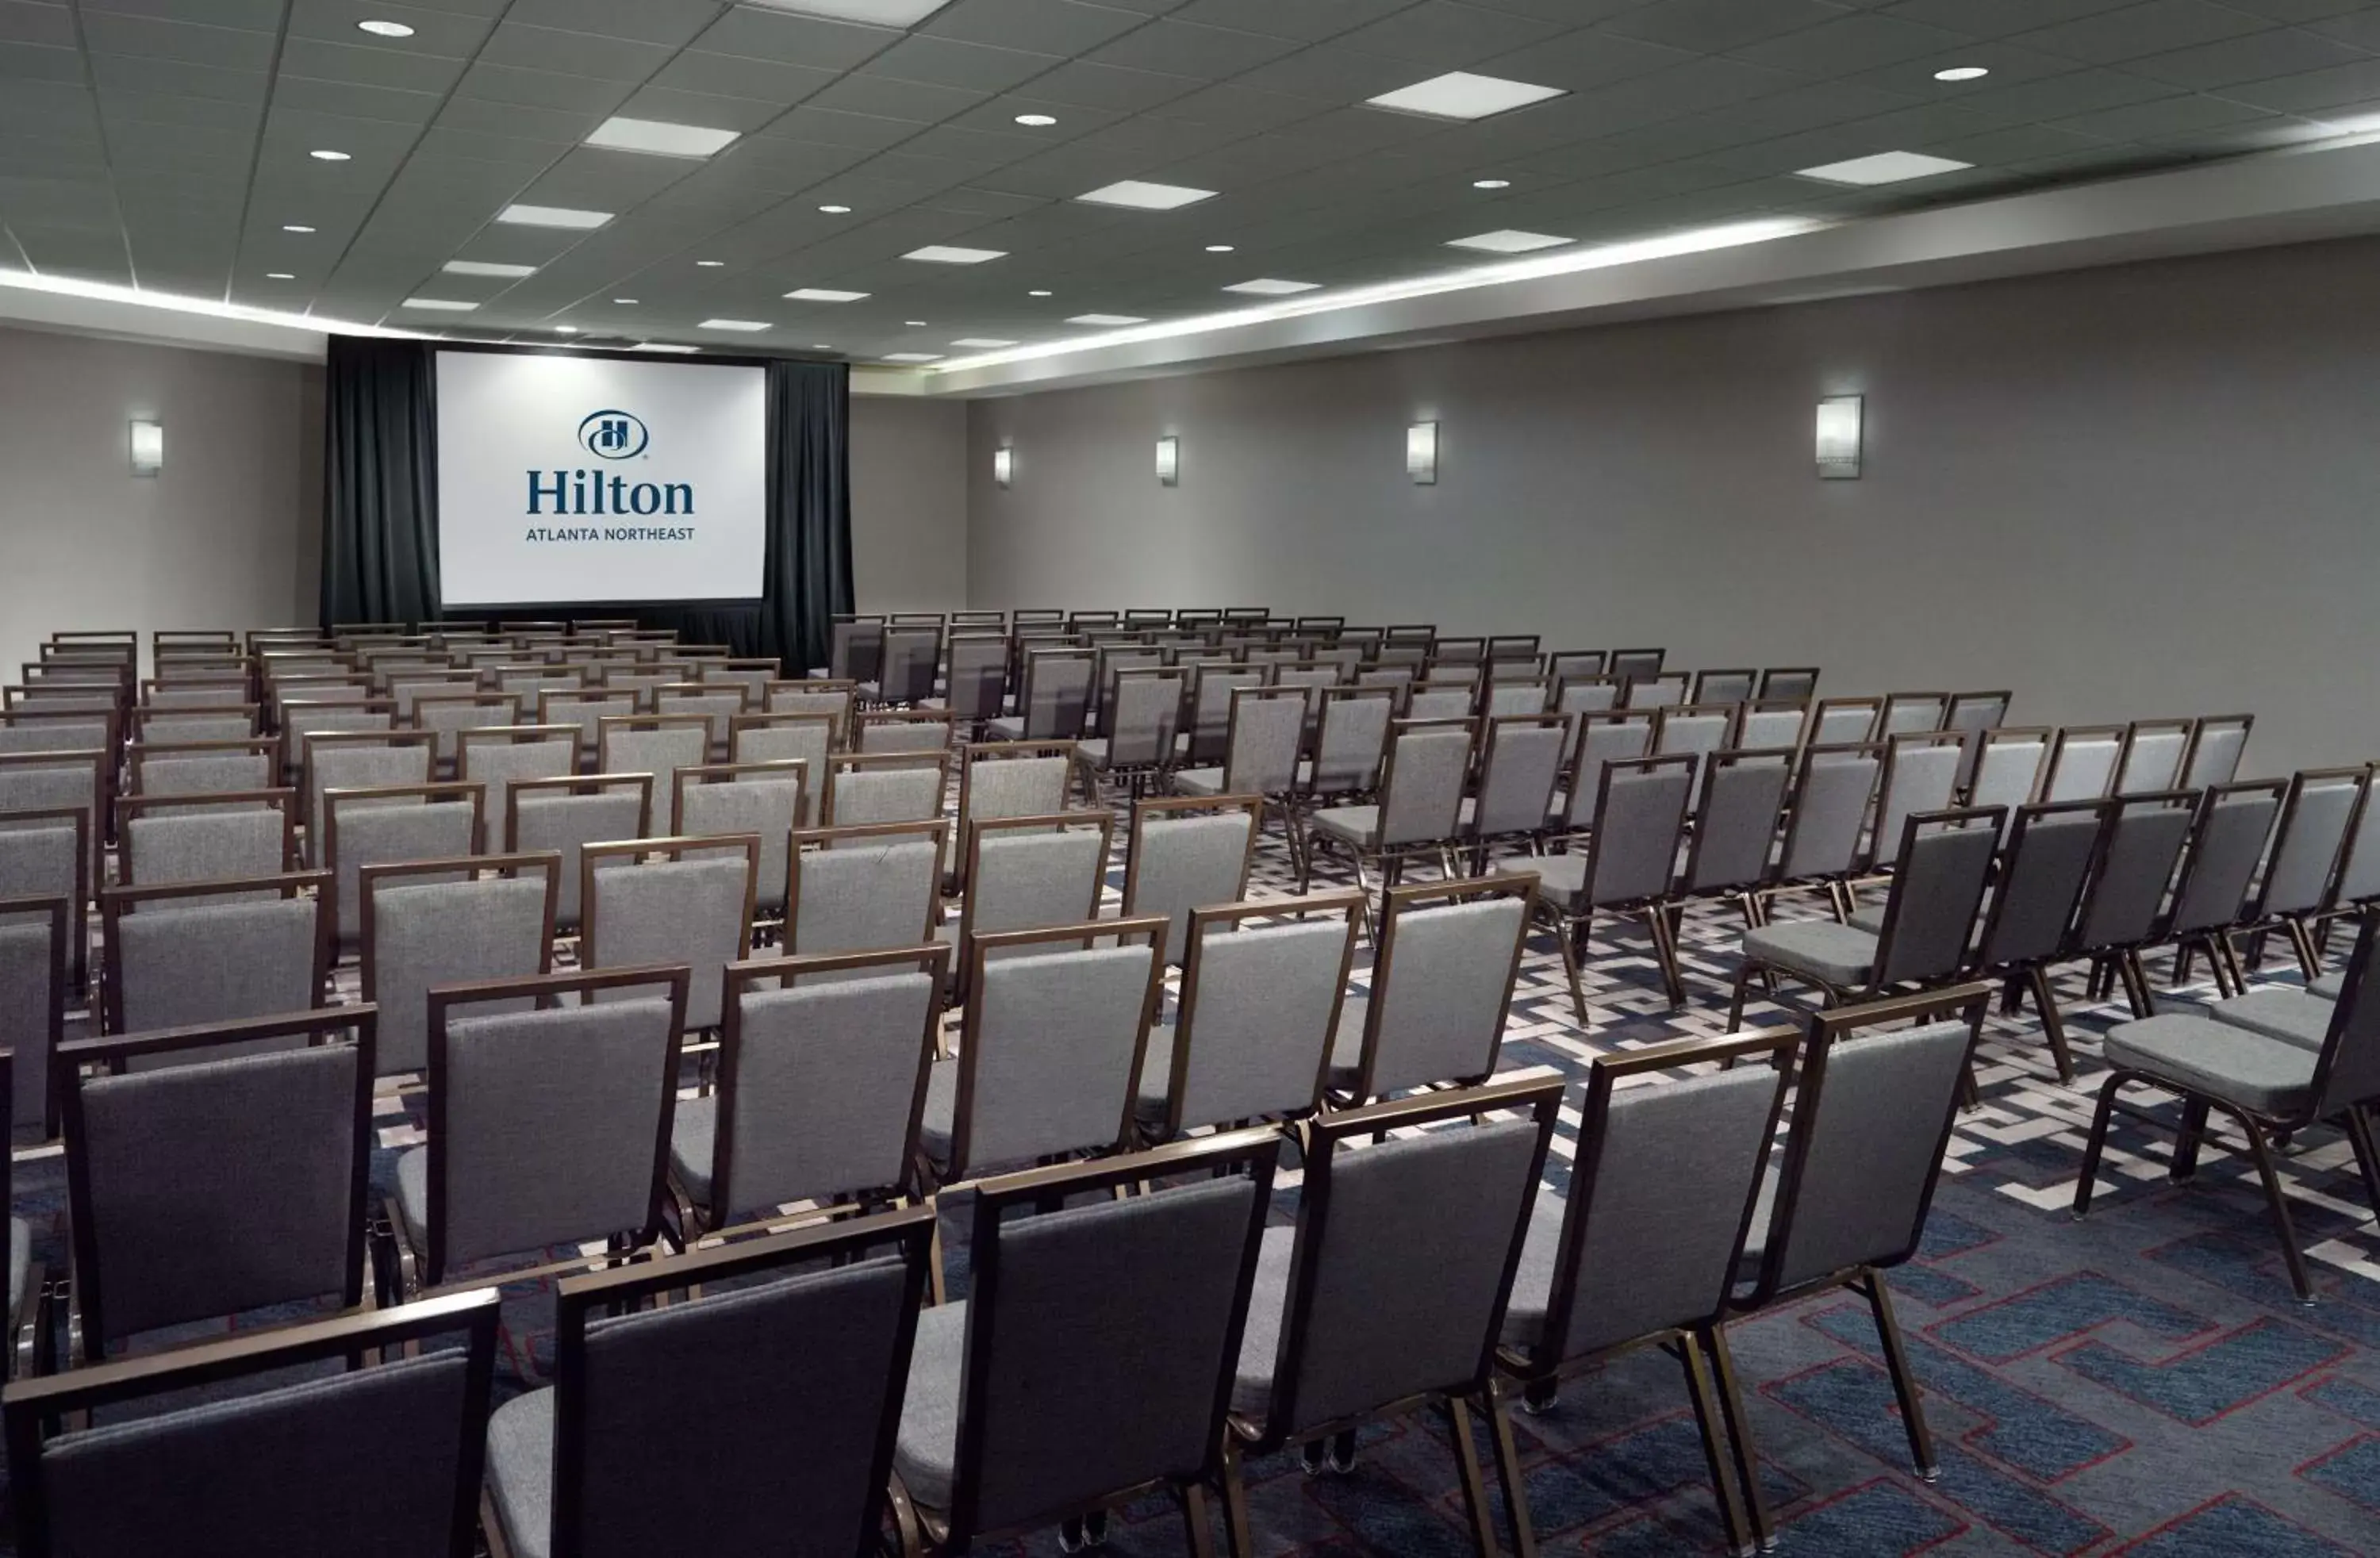 Meeting/conference room in Hilton Atlanta Northeast